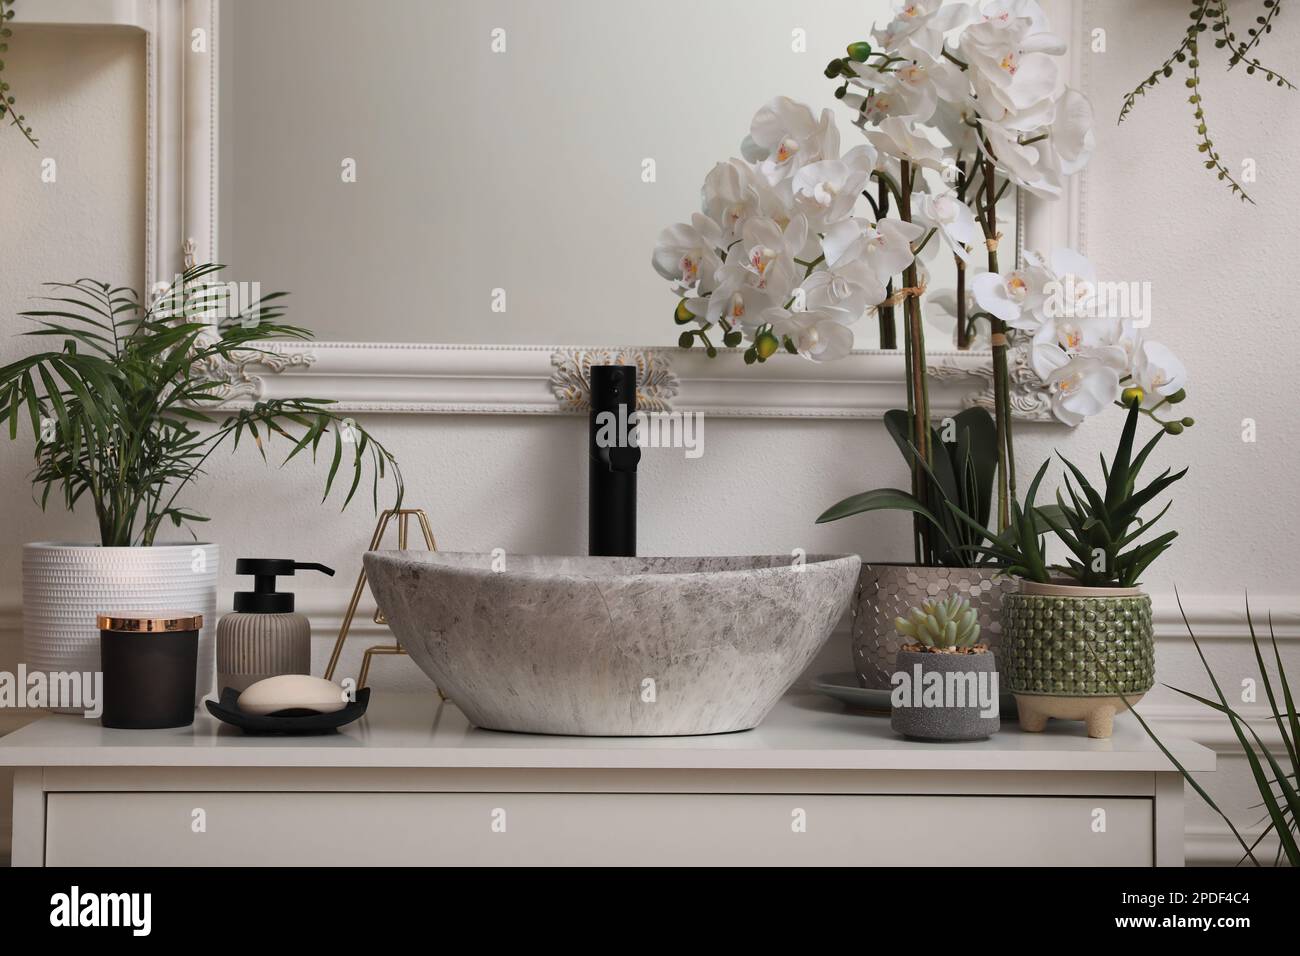 Stylish sink and beautiful houseplants in bathroom. Interior design Stock Photo